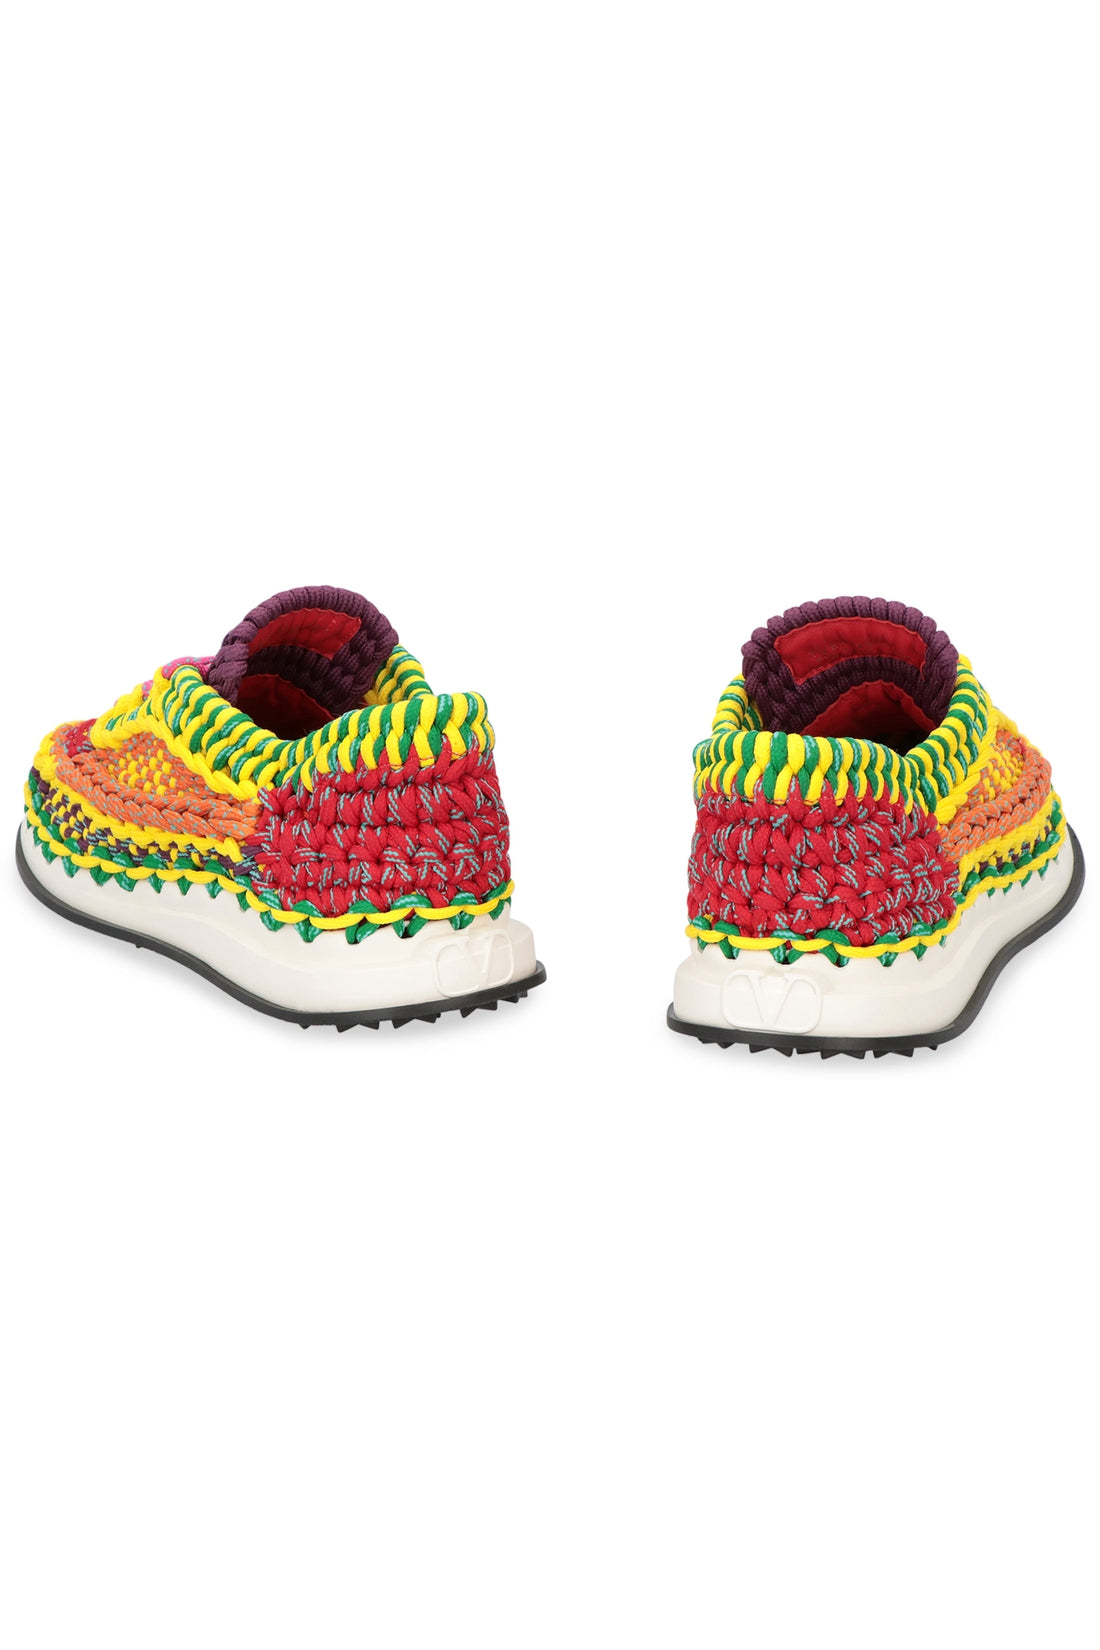 Valentino-OUTLET-SALE-Valentino Garavani - Crochet fabric low-top sneakers-ARCHIVIST